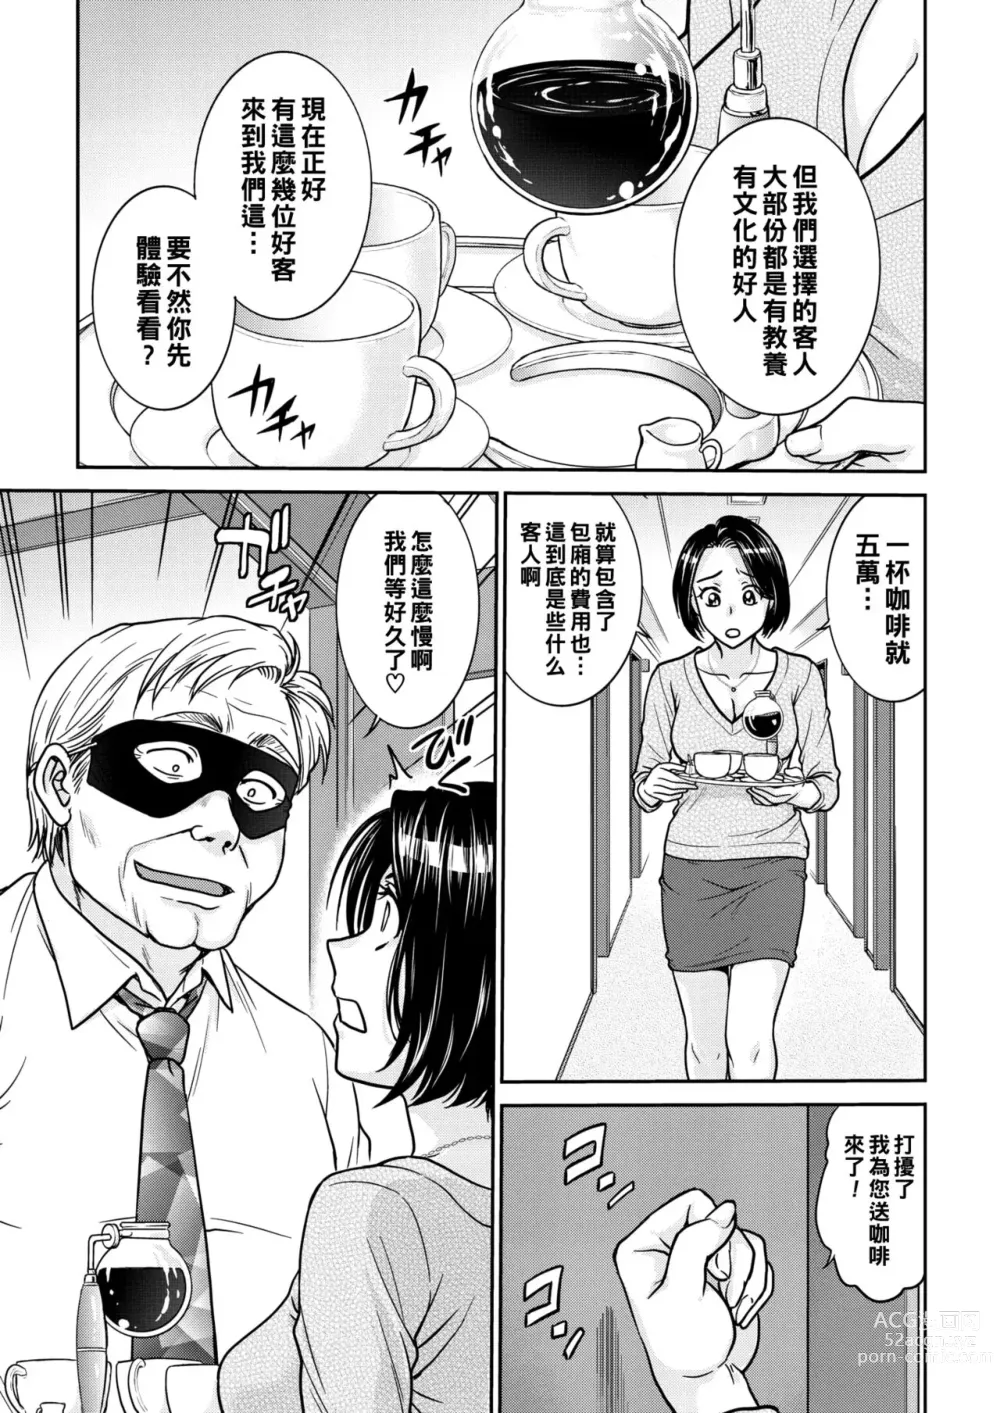 Page 3 of manga Hitozuma Cafe